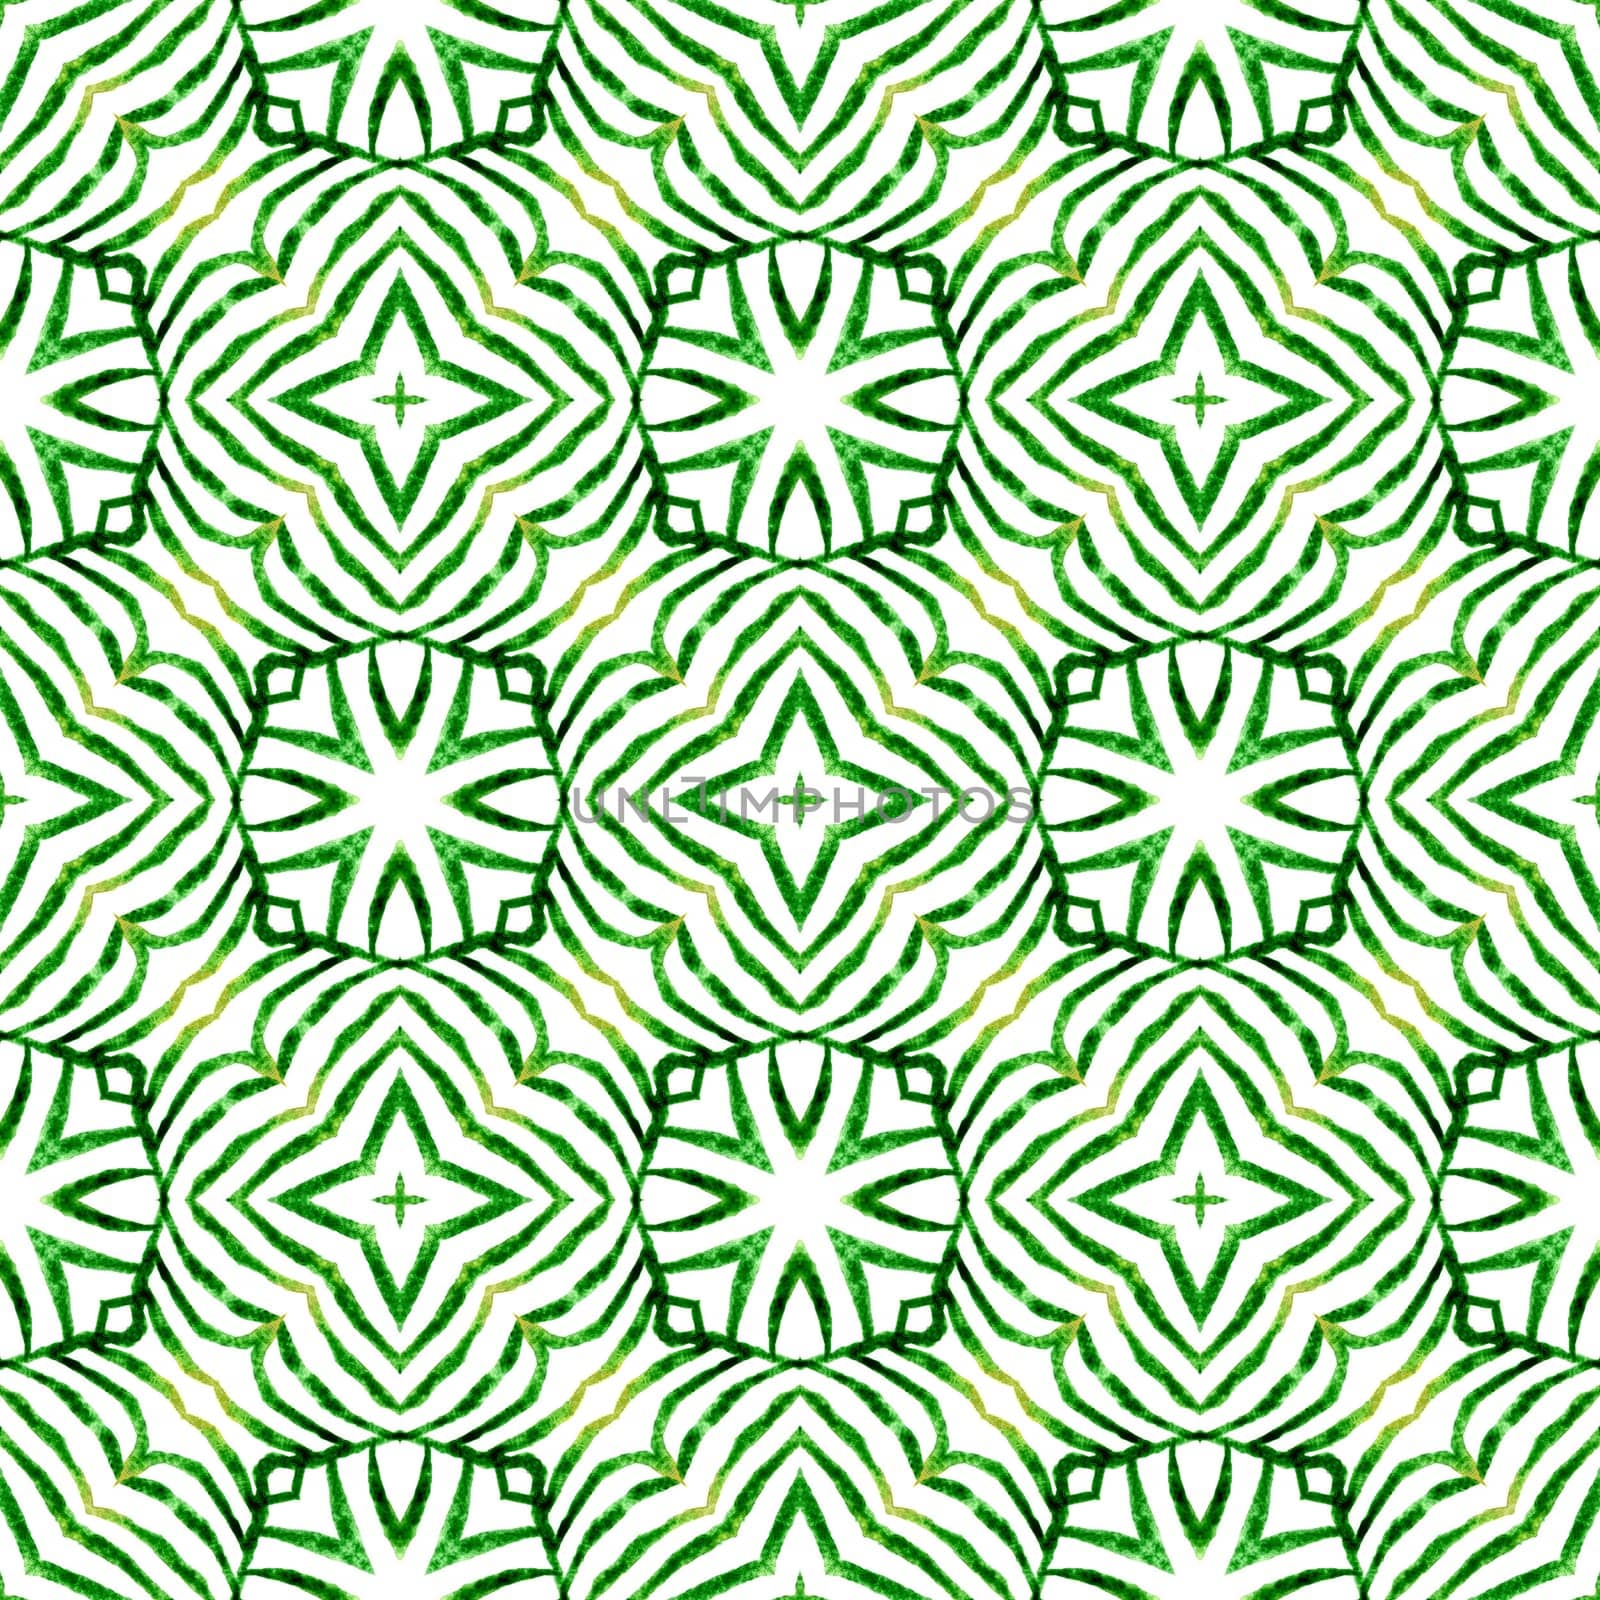 Mosaic seamless pattern. Green shapely boho chic by beginagain